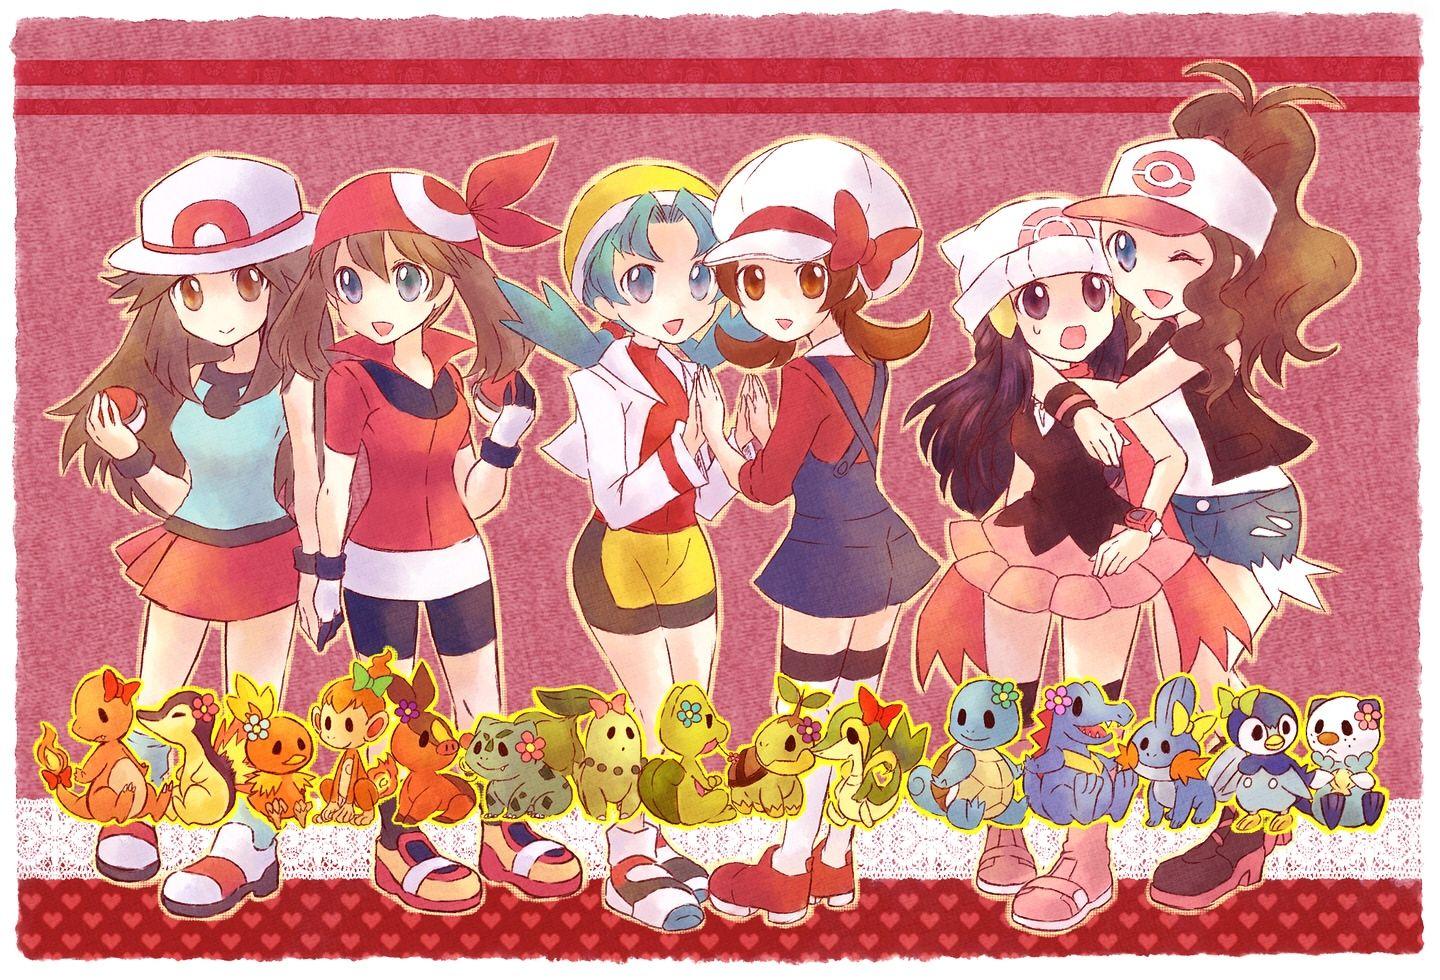 Pokemon Dawn wallpaper by AnnoyedInteraction - Download on ZEDGE™